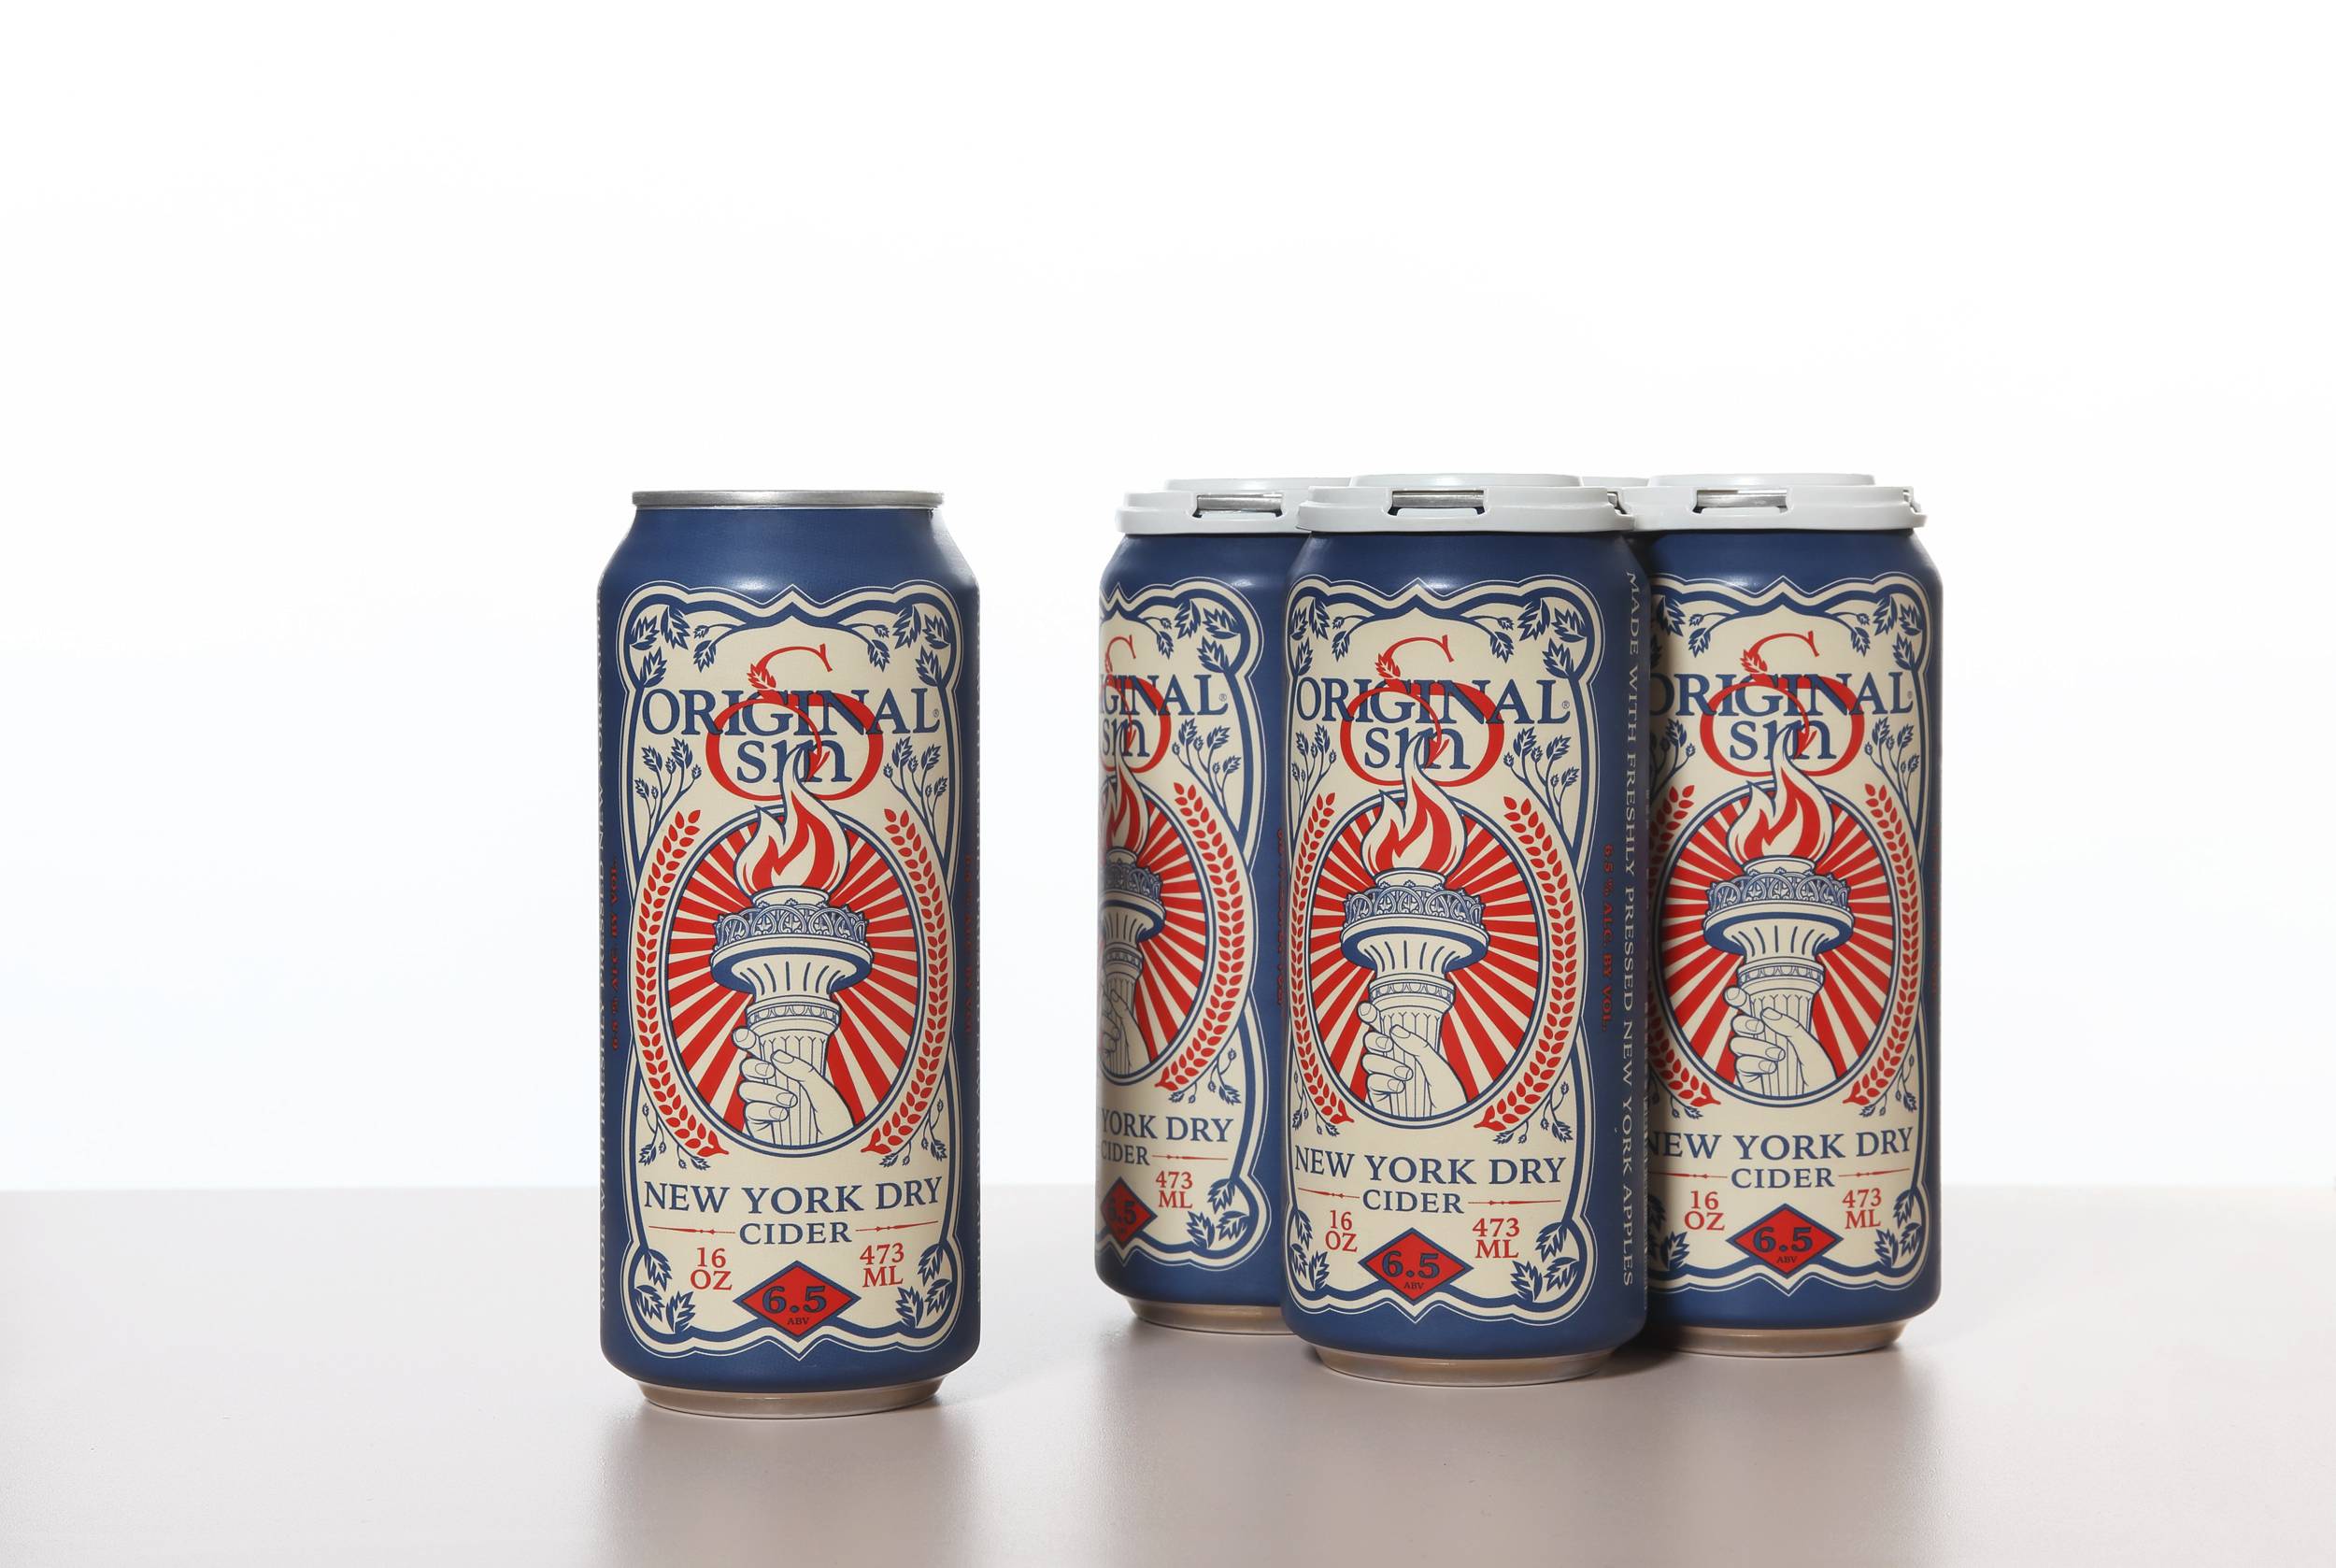 Original Sin New York Dry Cider cans